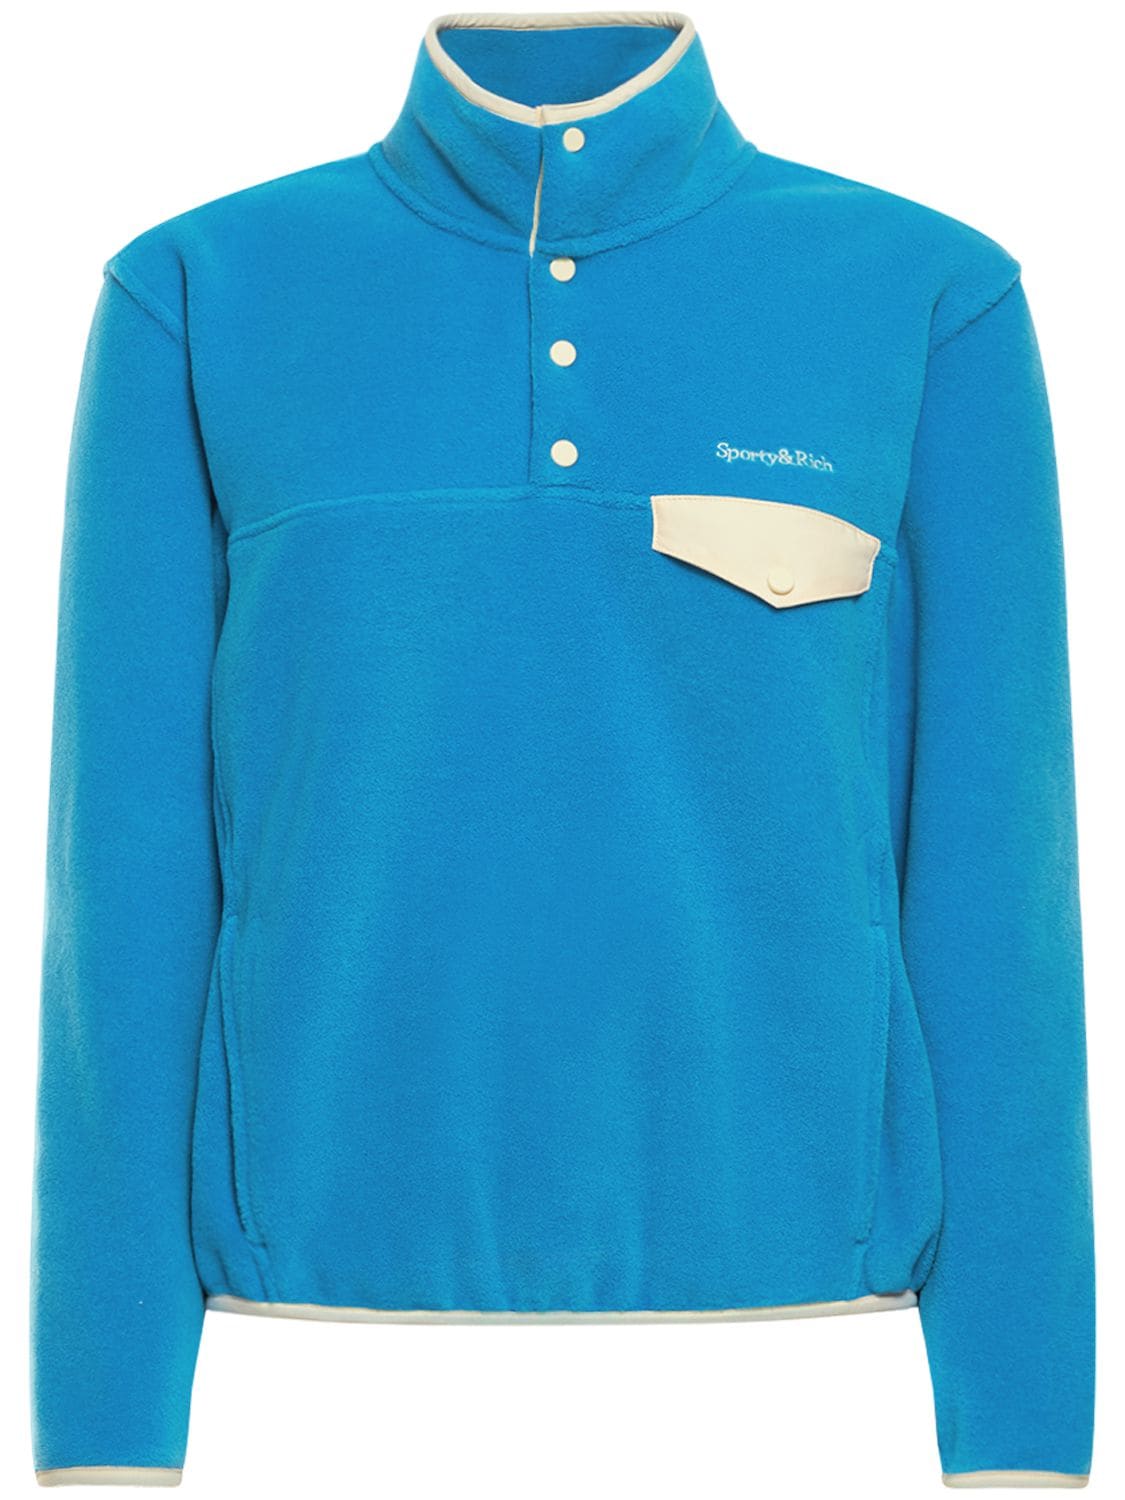 Sporty And Rich Serif Logo Polar Fleece Sweatshirt In Blue